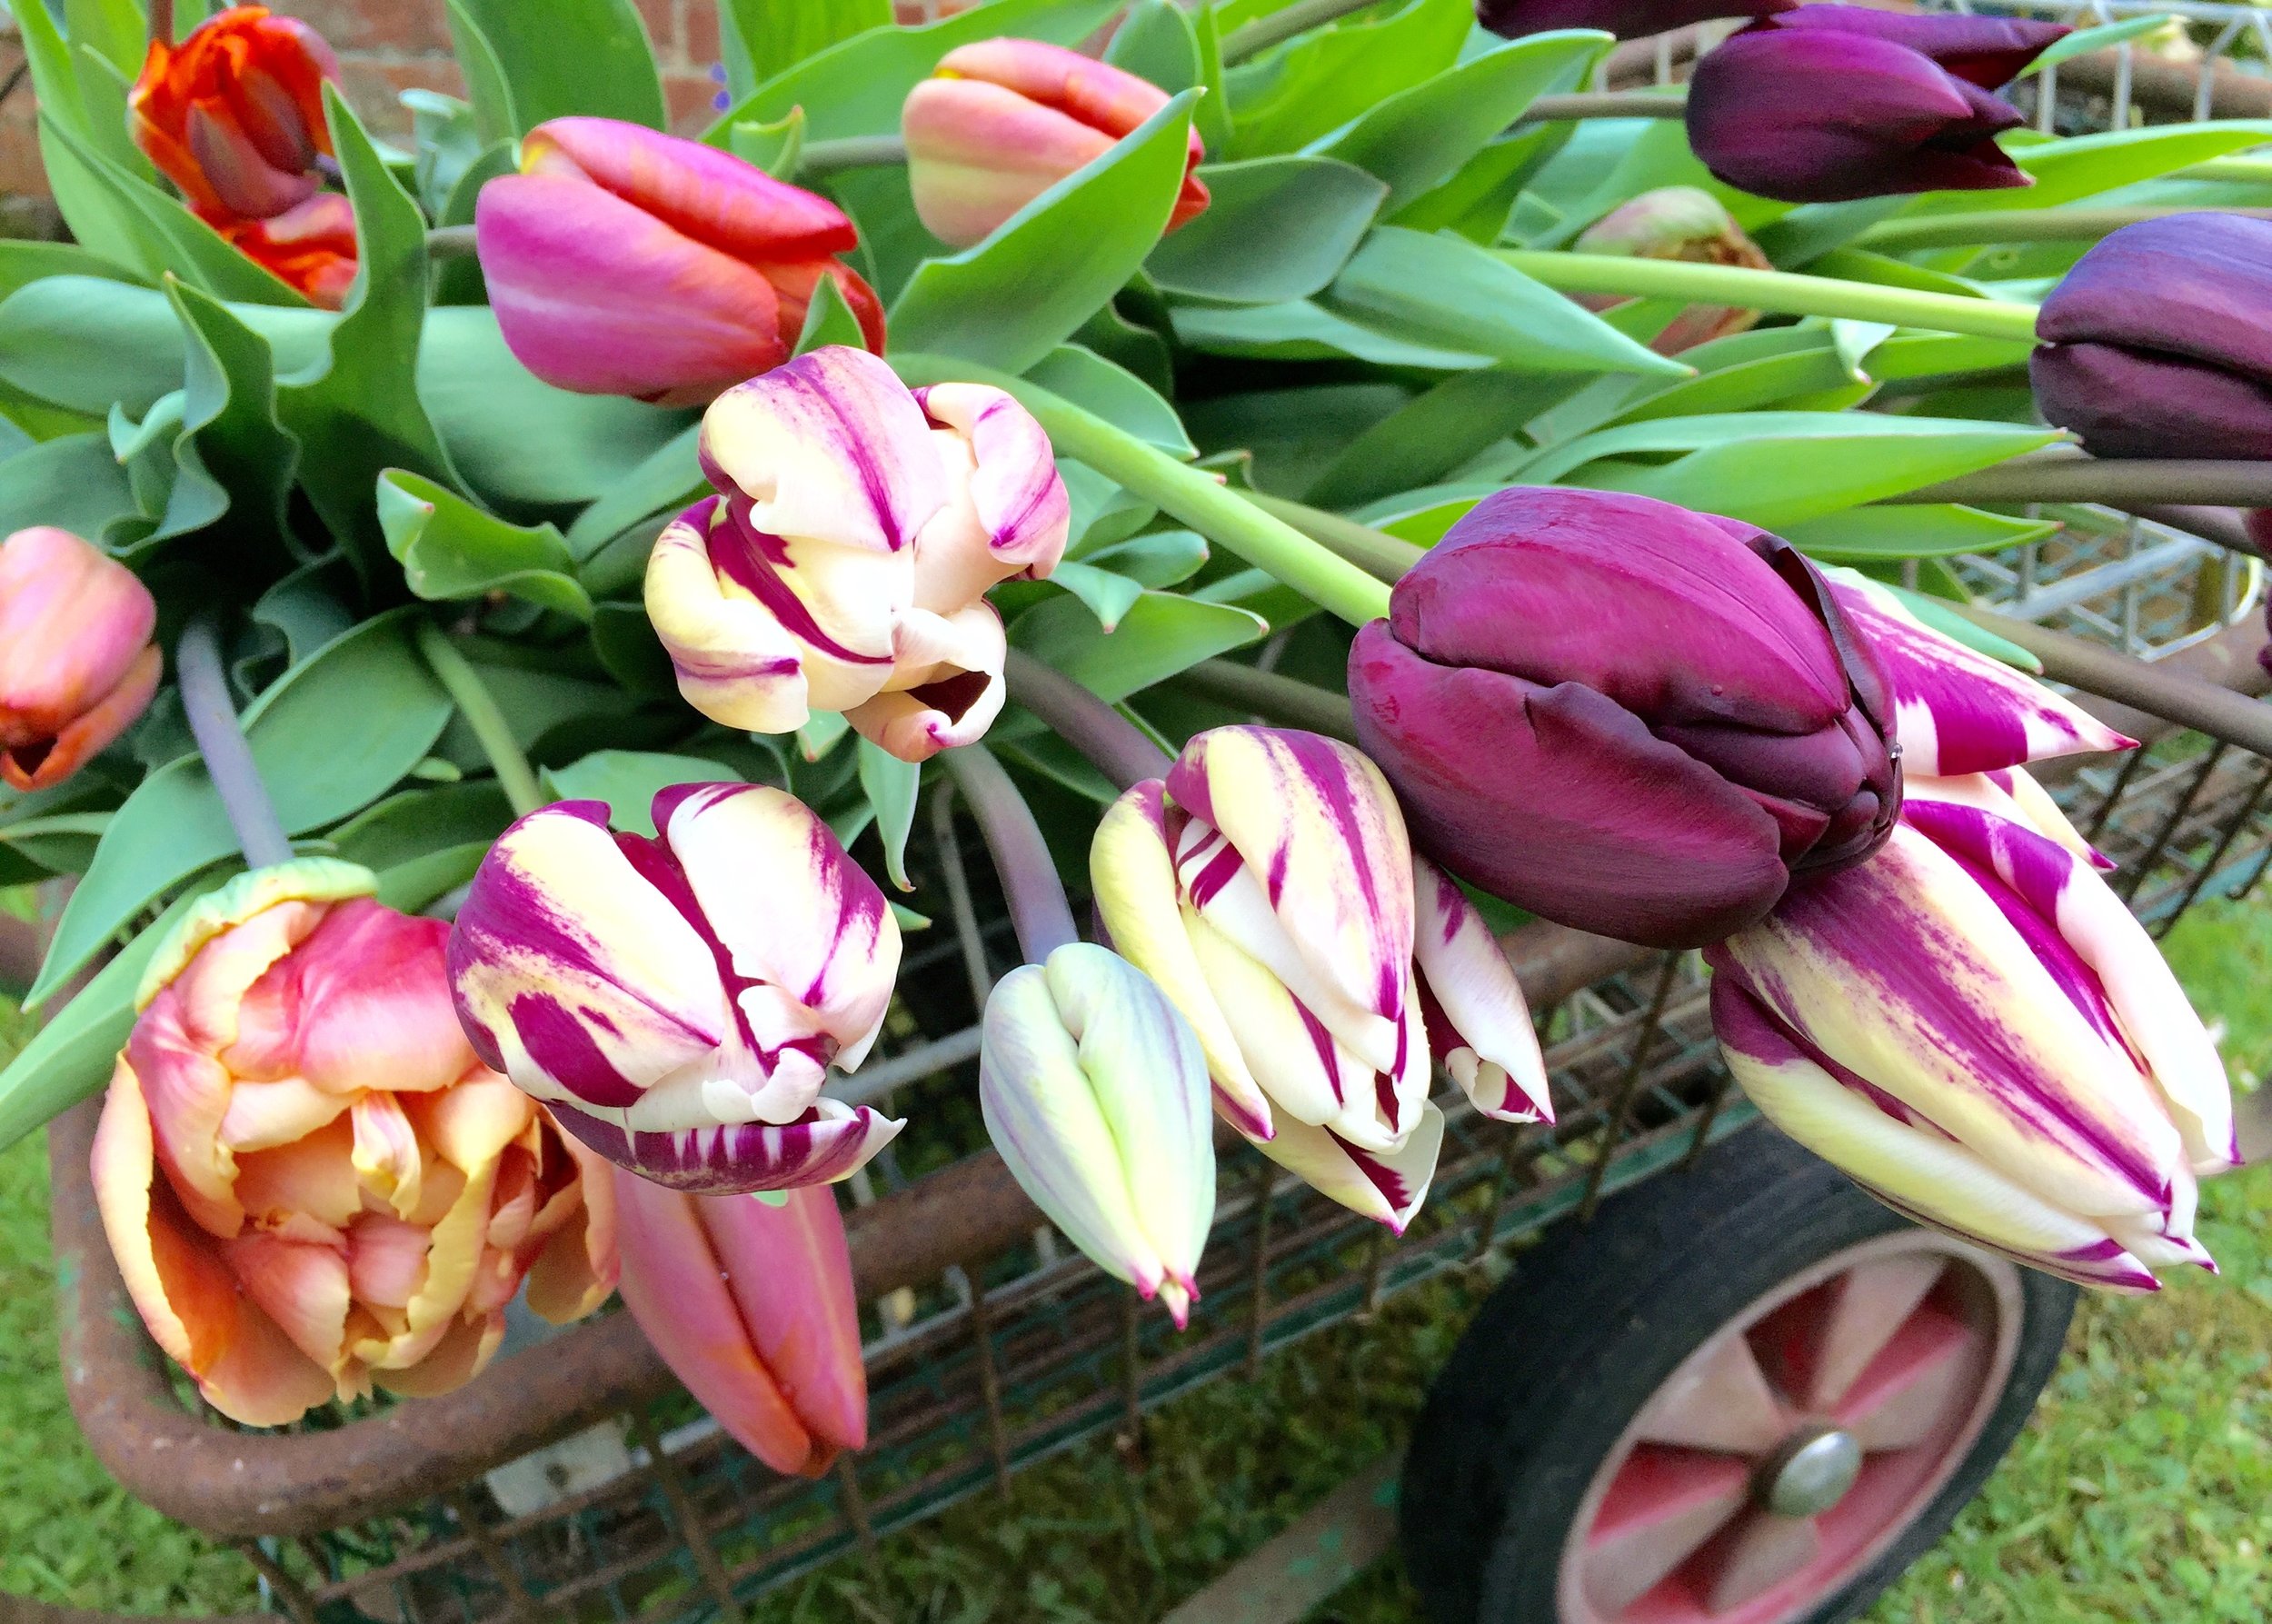 Freshly harvested tulips